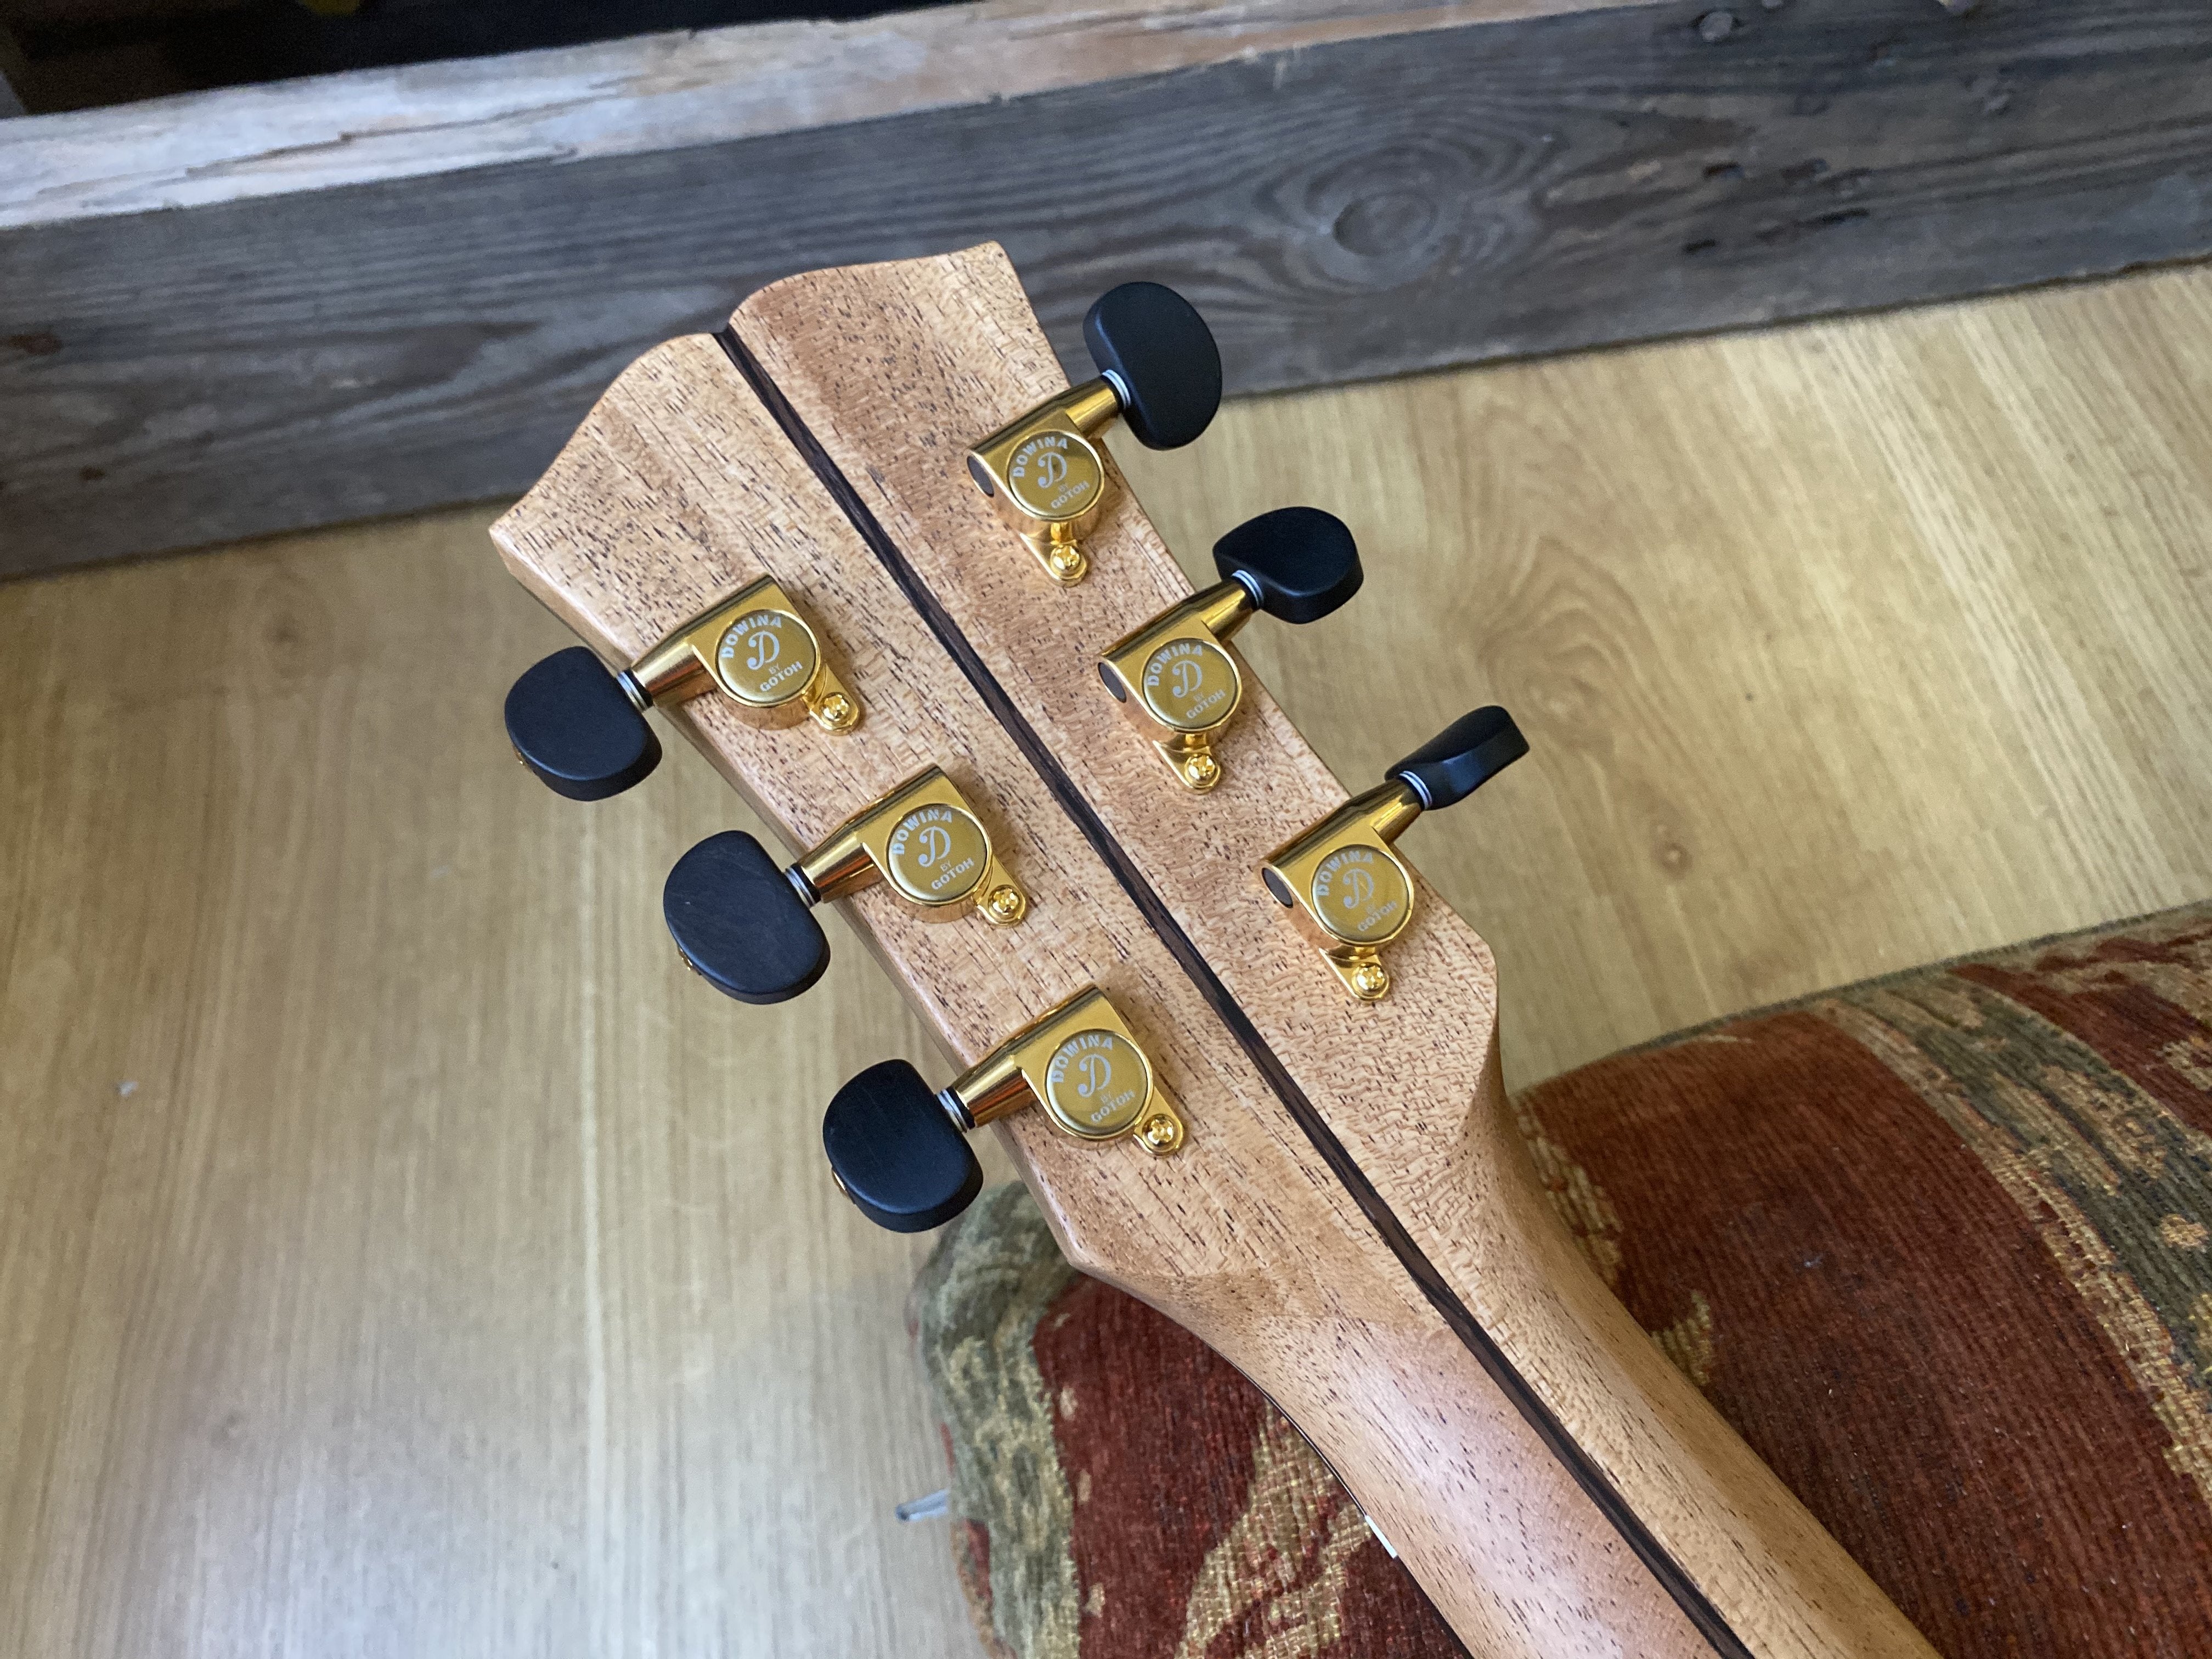 Dowina Master Build Madagascar Rosewood GAC TDS - Incredibly Rare, Acoustic Guitar for sale at Richards Guitars.